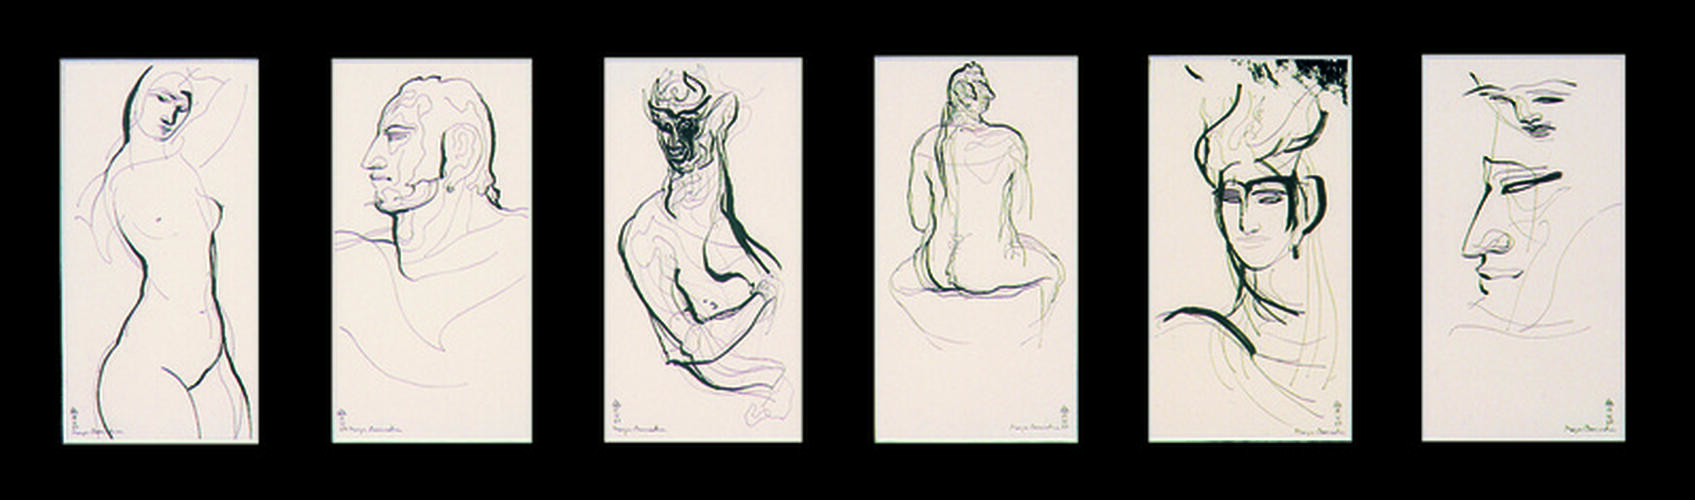 Maya Damadian, Routes II, 1987, 48 x 103 cm, ULB-C-AMC-0044© Collectie moderne en hedendaagse kunst ULB